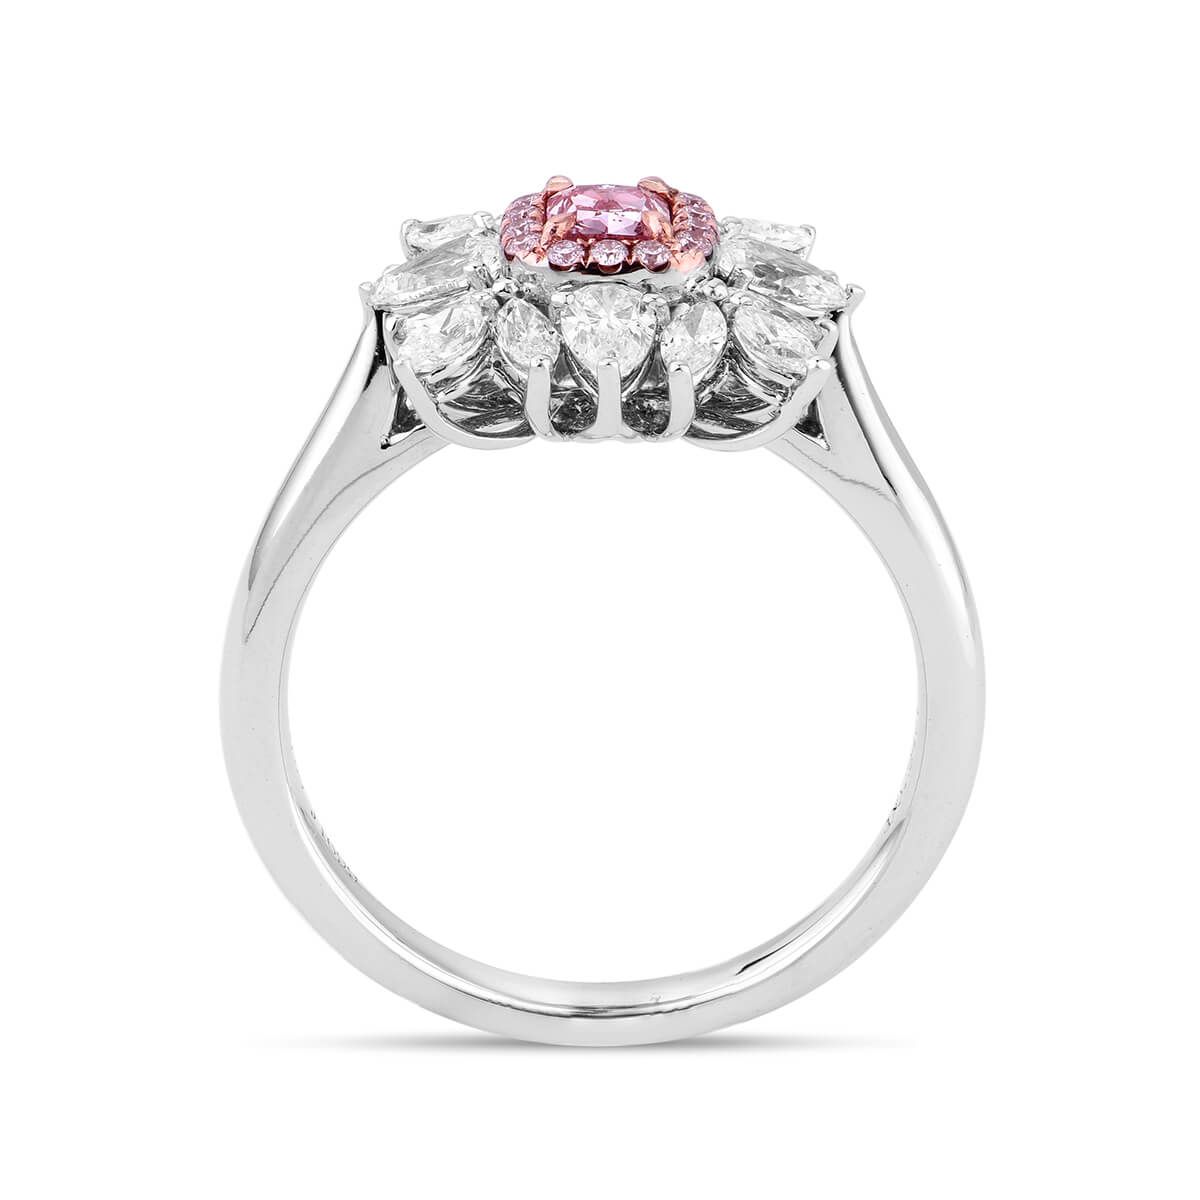 Fancy Intense Pink Diamond Ring, 0.24 Ct. (1.14 Ct. TW), Radiant shape, GIA Certified, 2183340828